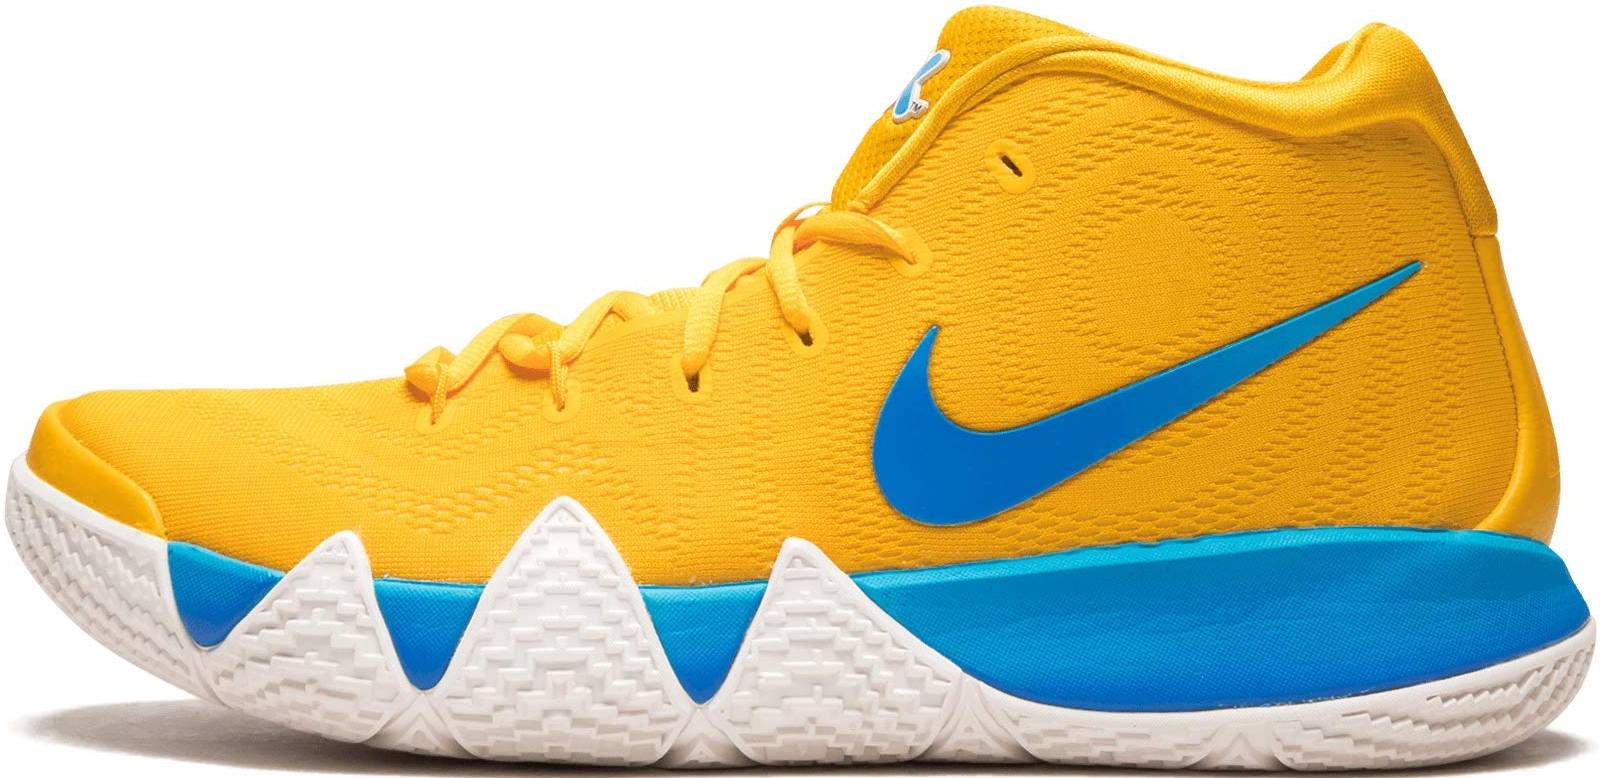 yellow basketball shoes nike